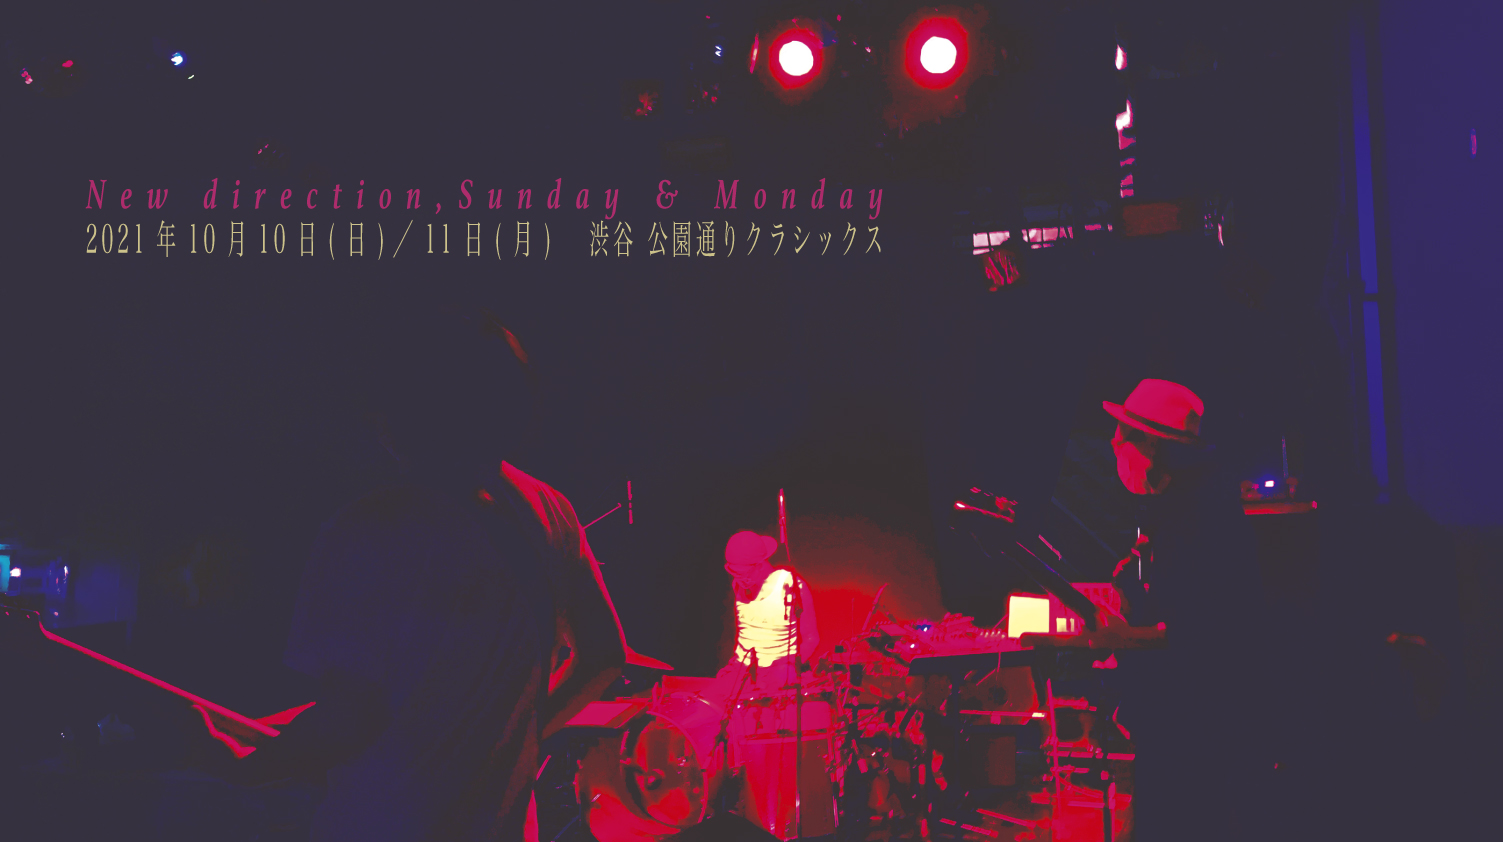 MUGAMICHILL 2days "New direction, Sunday & Monday”